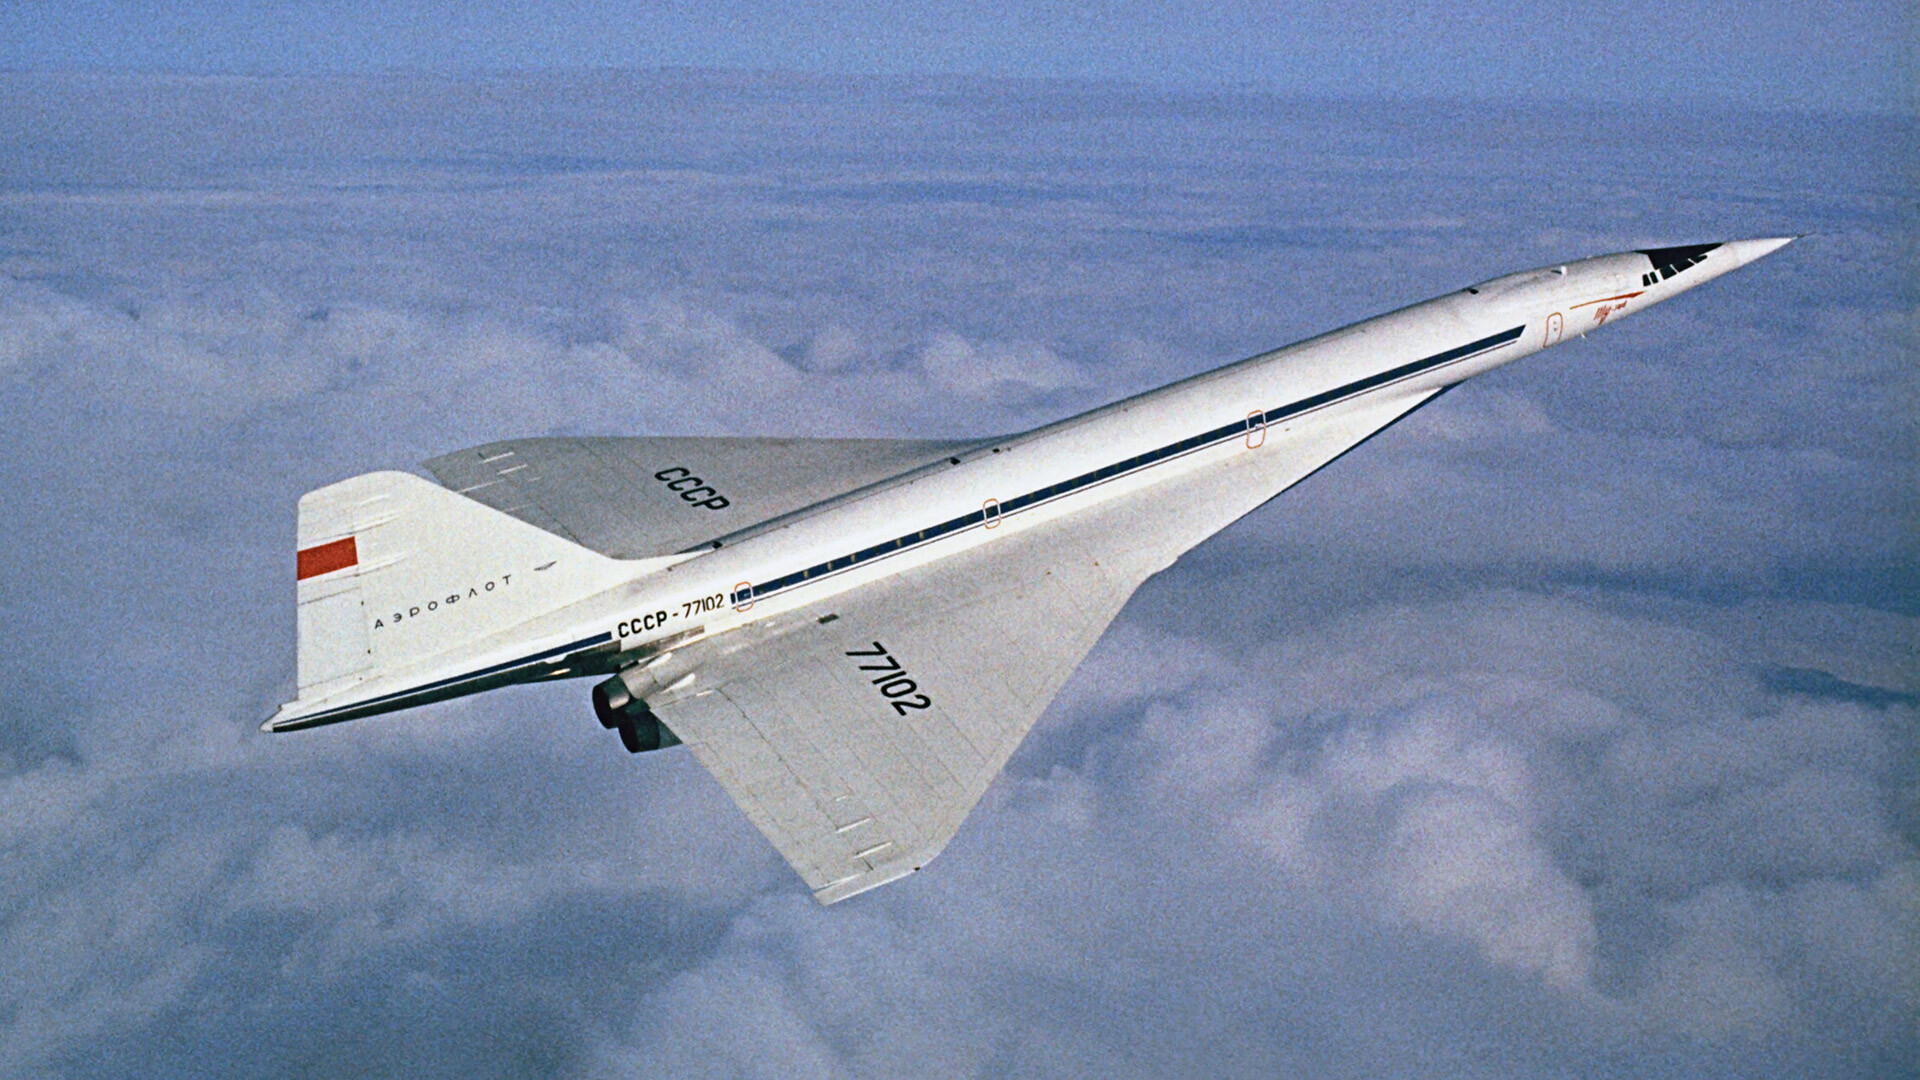  Tu-144 supersonic passenger airliner.